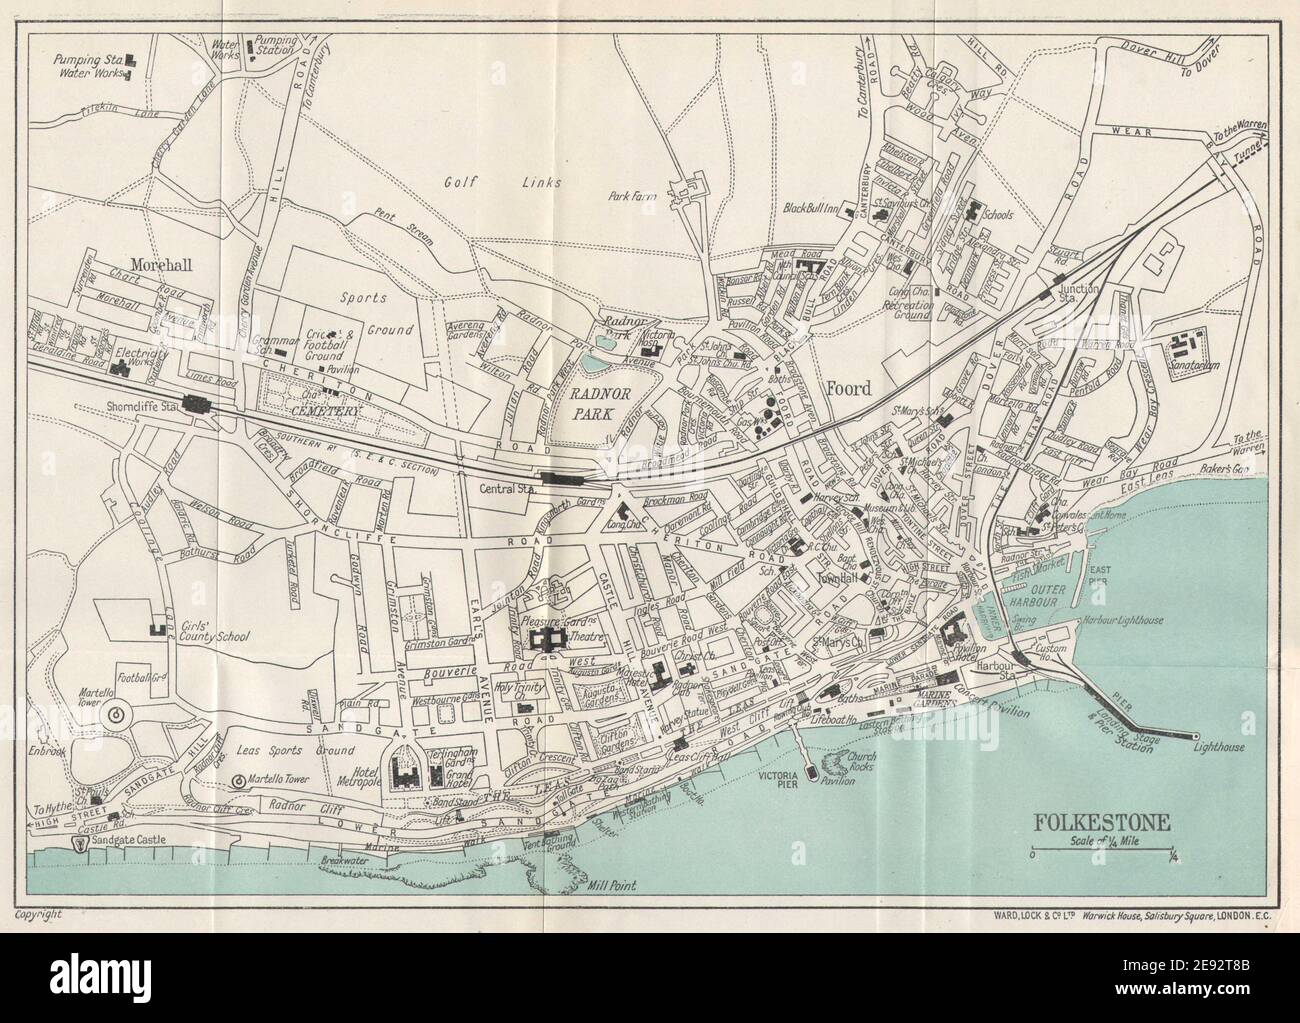 FOLKESTONE vintage tourist town city plan. Kent. WARD LOCK 1928 old map Stock Photo